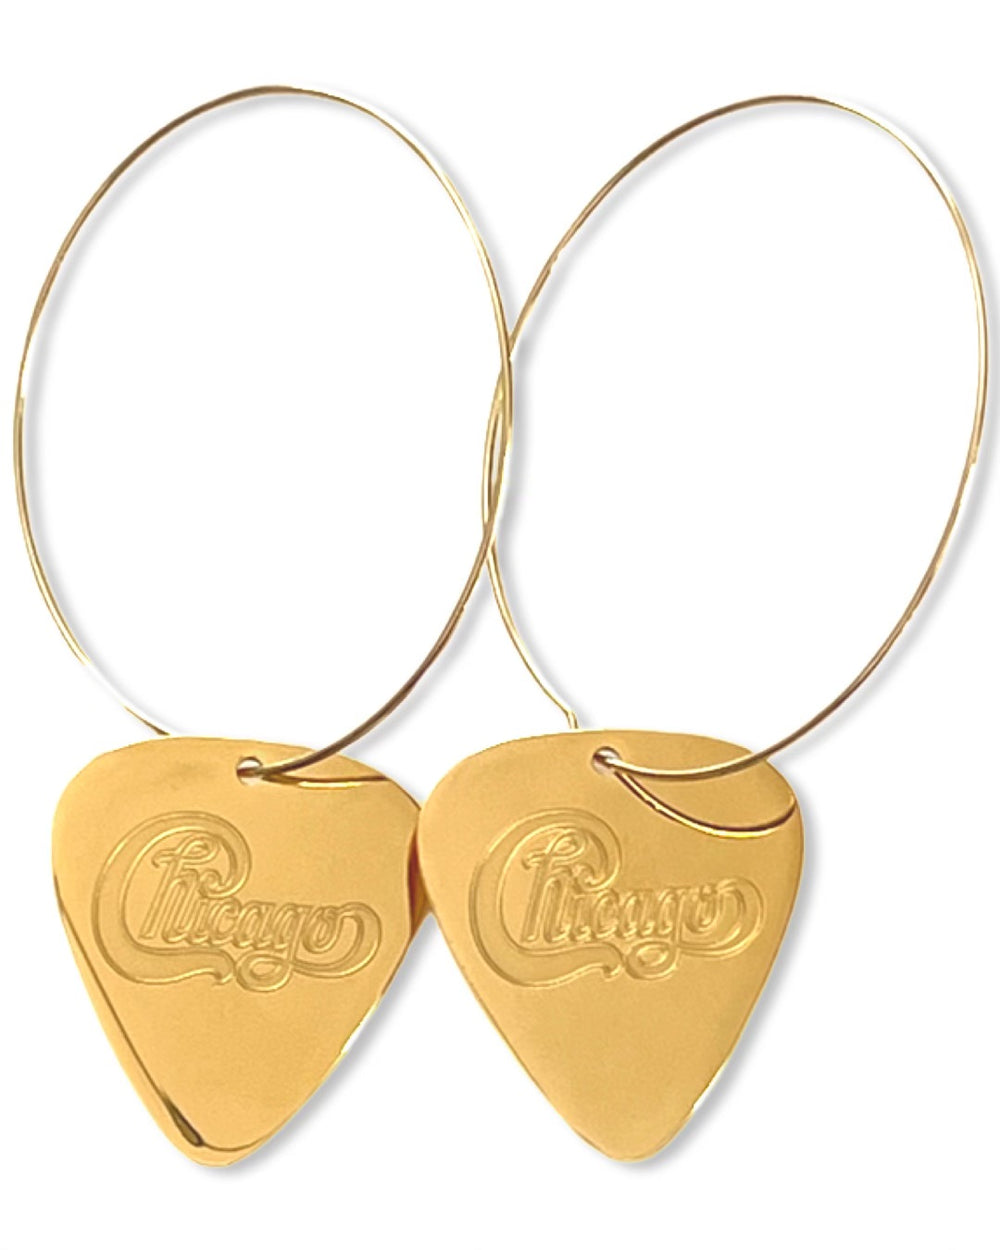 Chicago Gold Reversible Single Guitar Pick Earrings